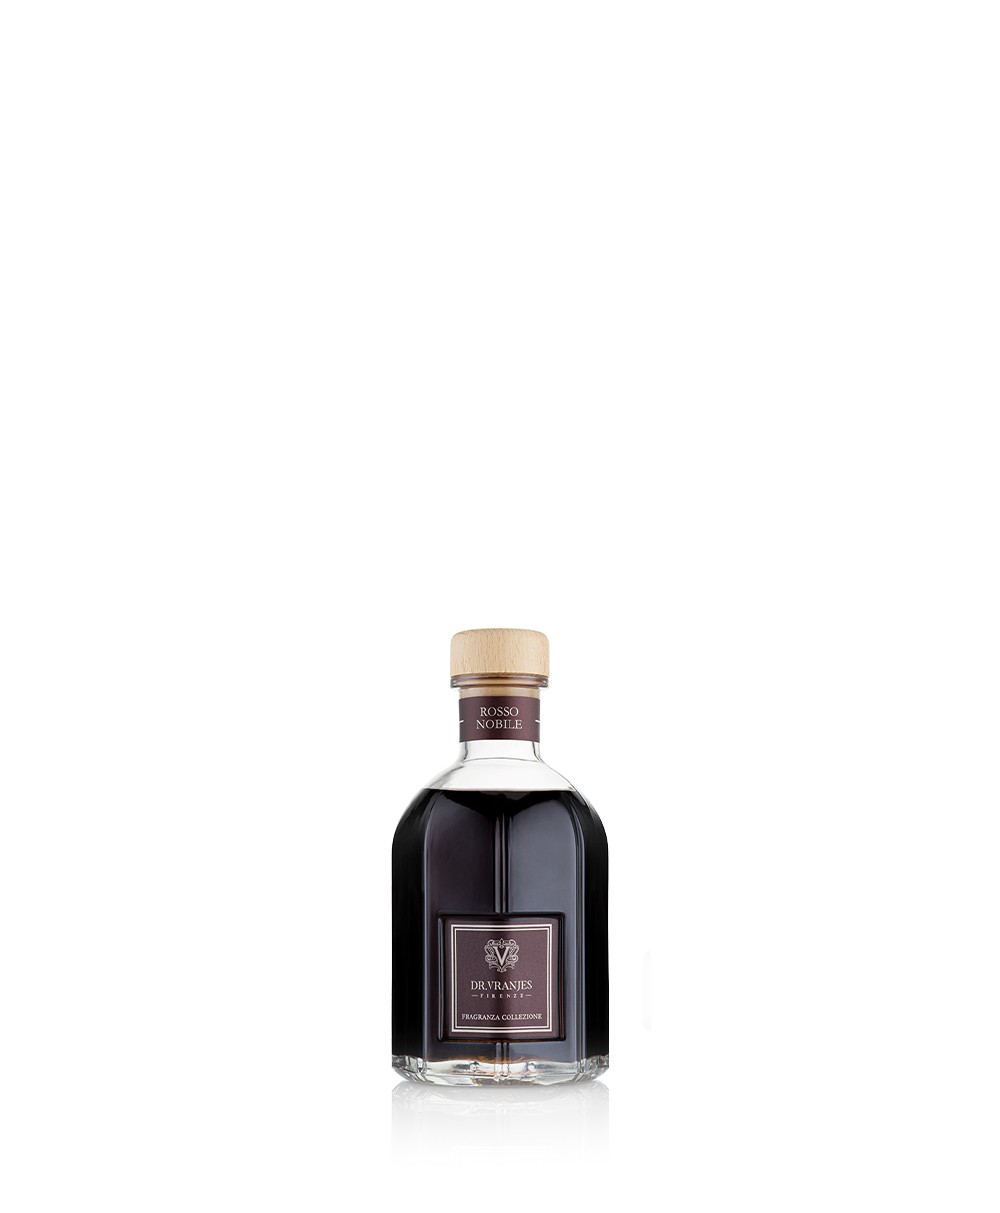 Rosso Nobile Diffuser 250ml aus der Classic Fragrance Collection von Dr. Vranjes Firenze im RAUM Conceptstore